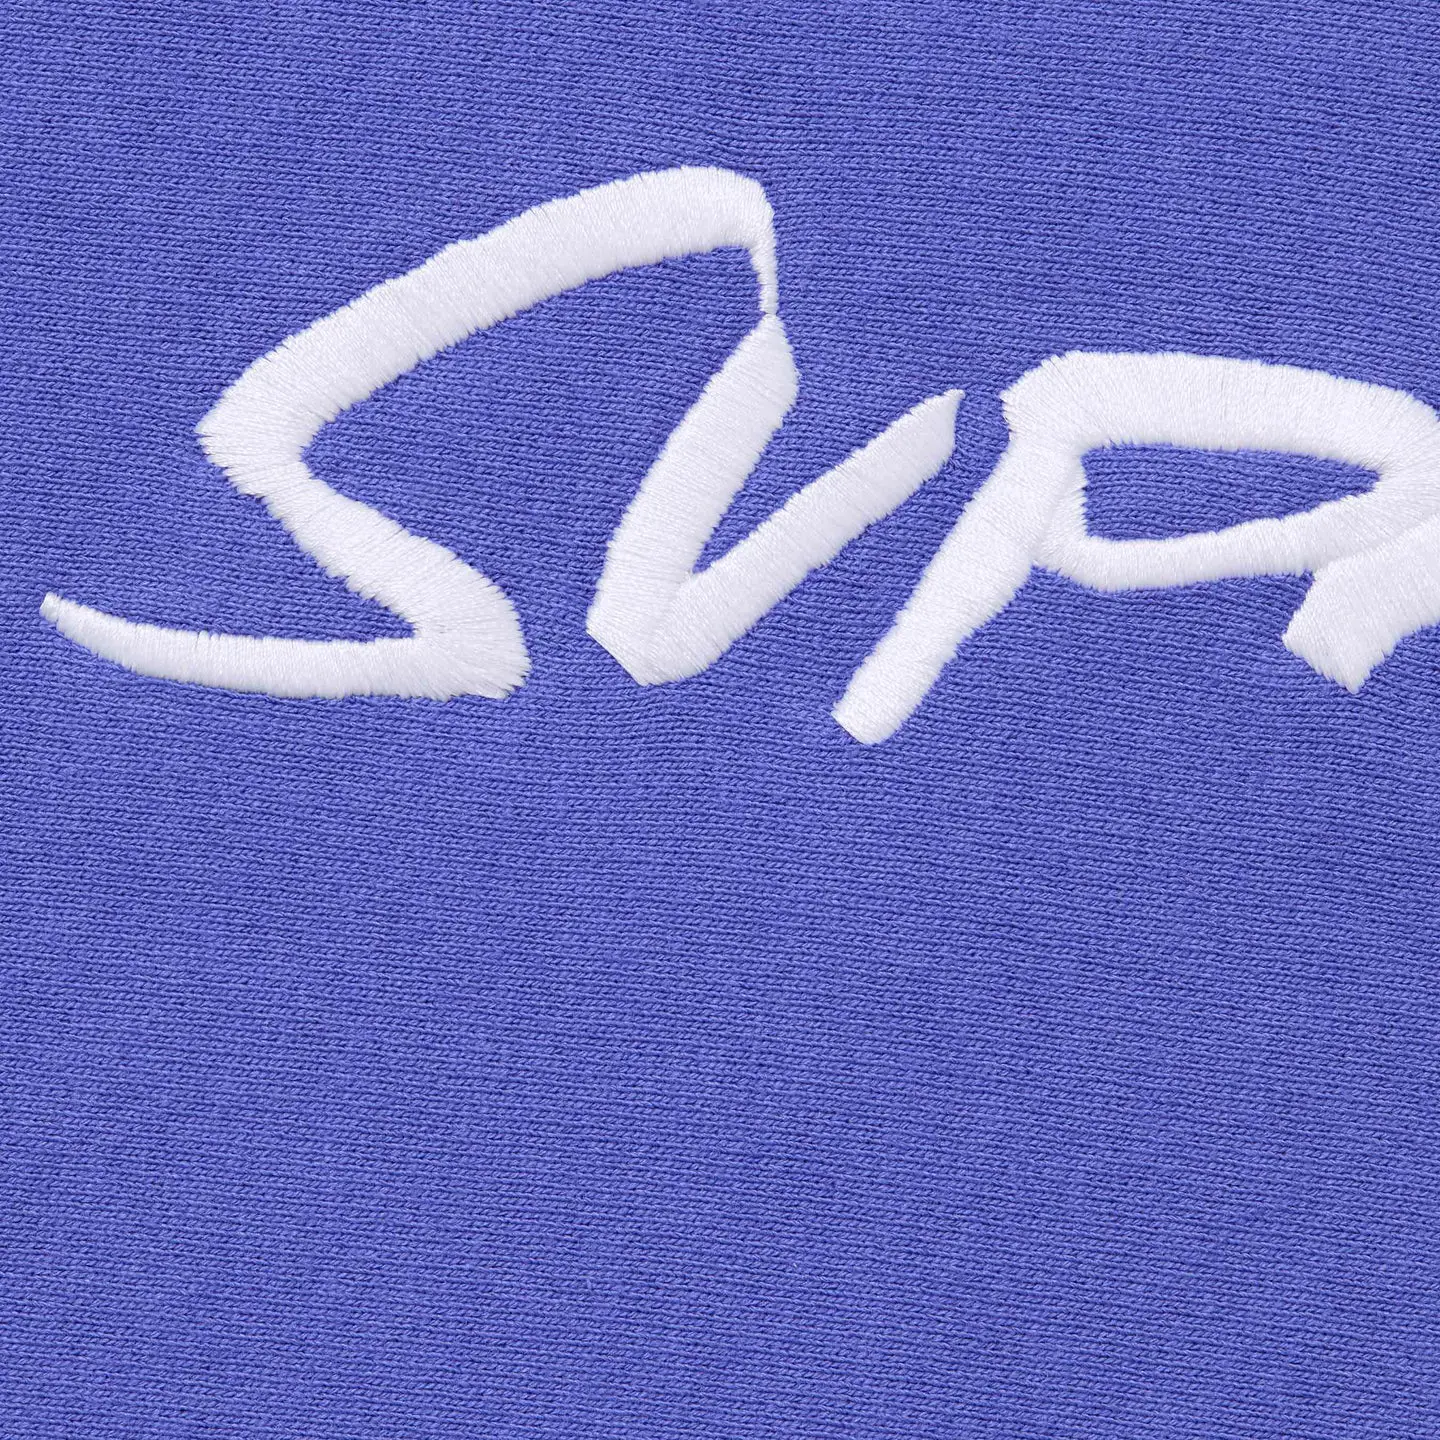 Supreme Futura Hooded Sweatshirt